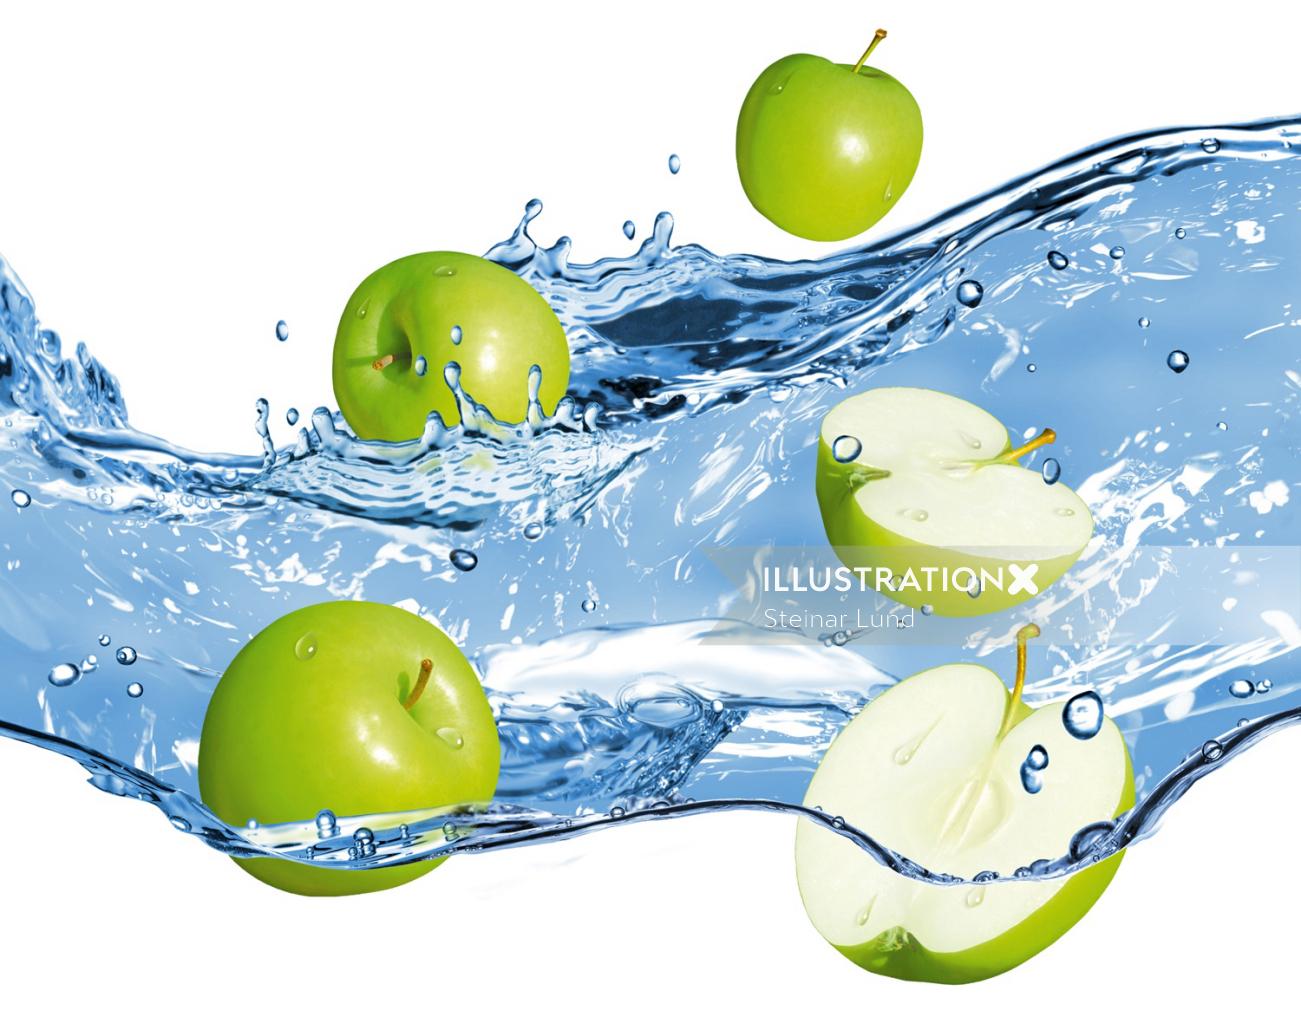 Green Apples in water splash